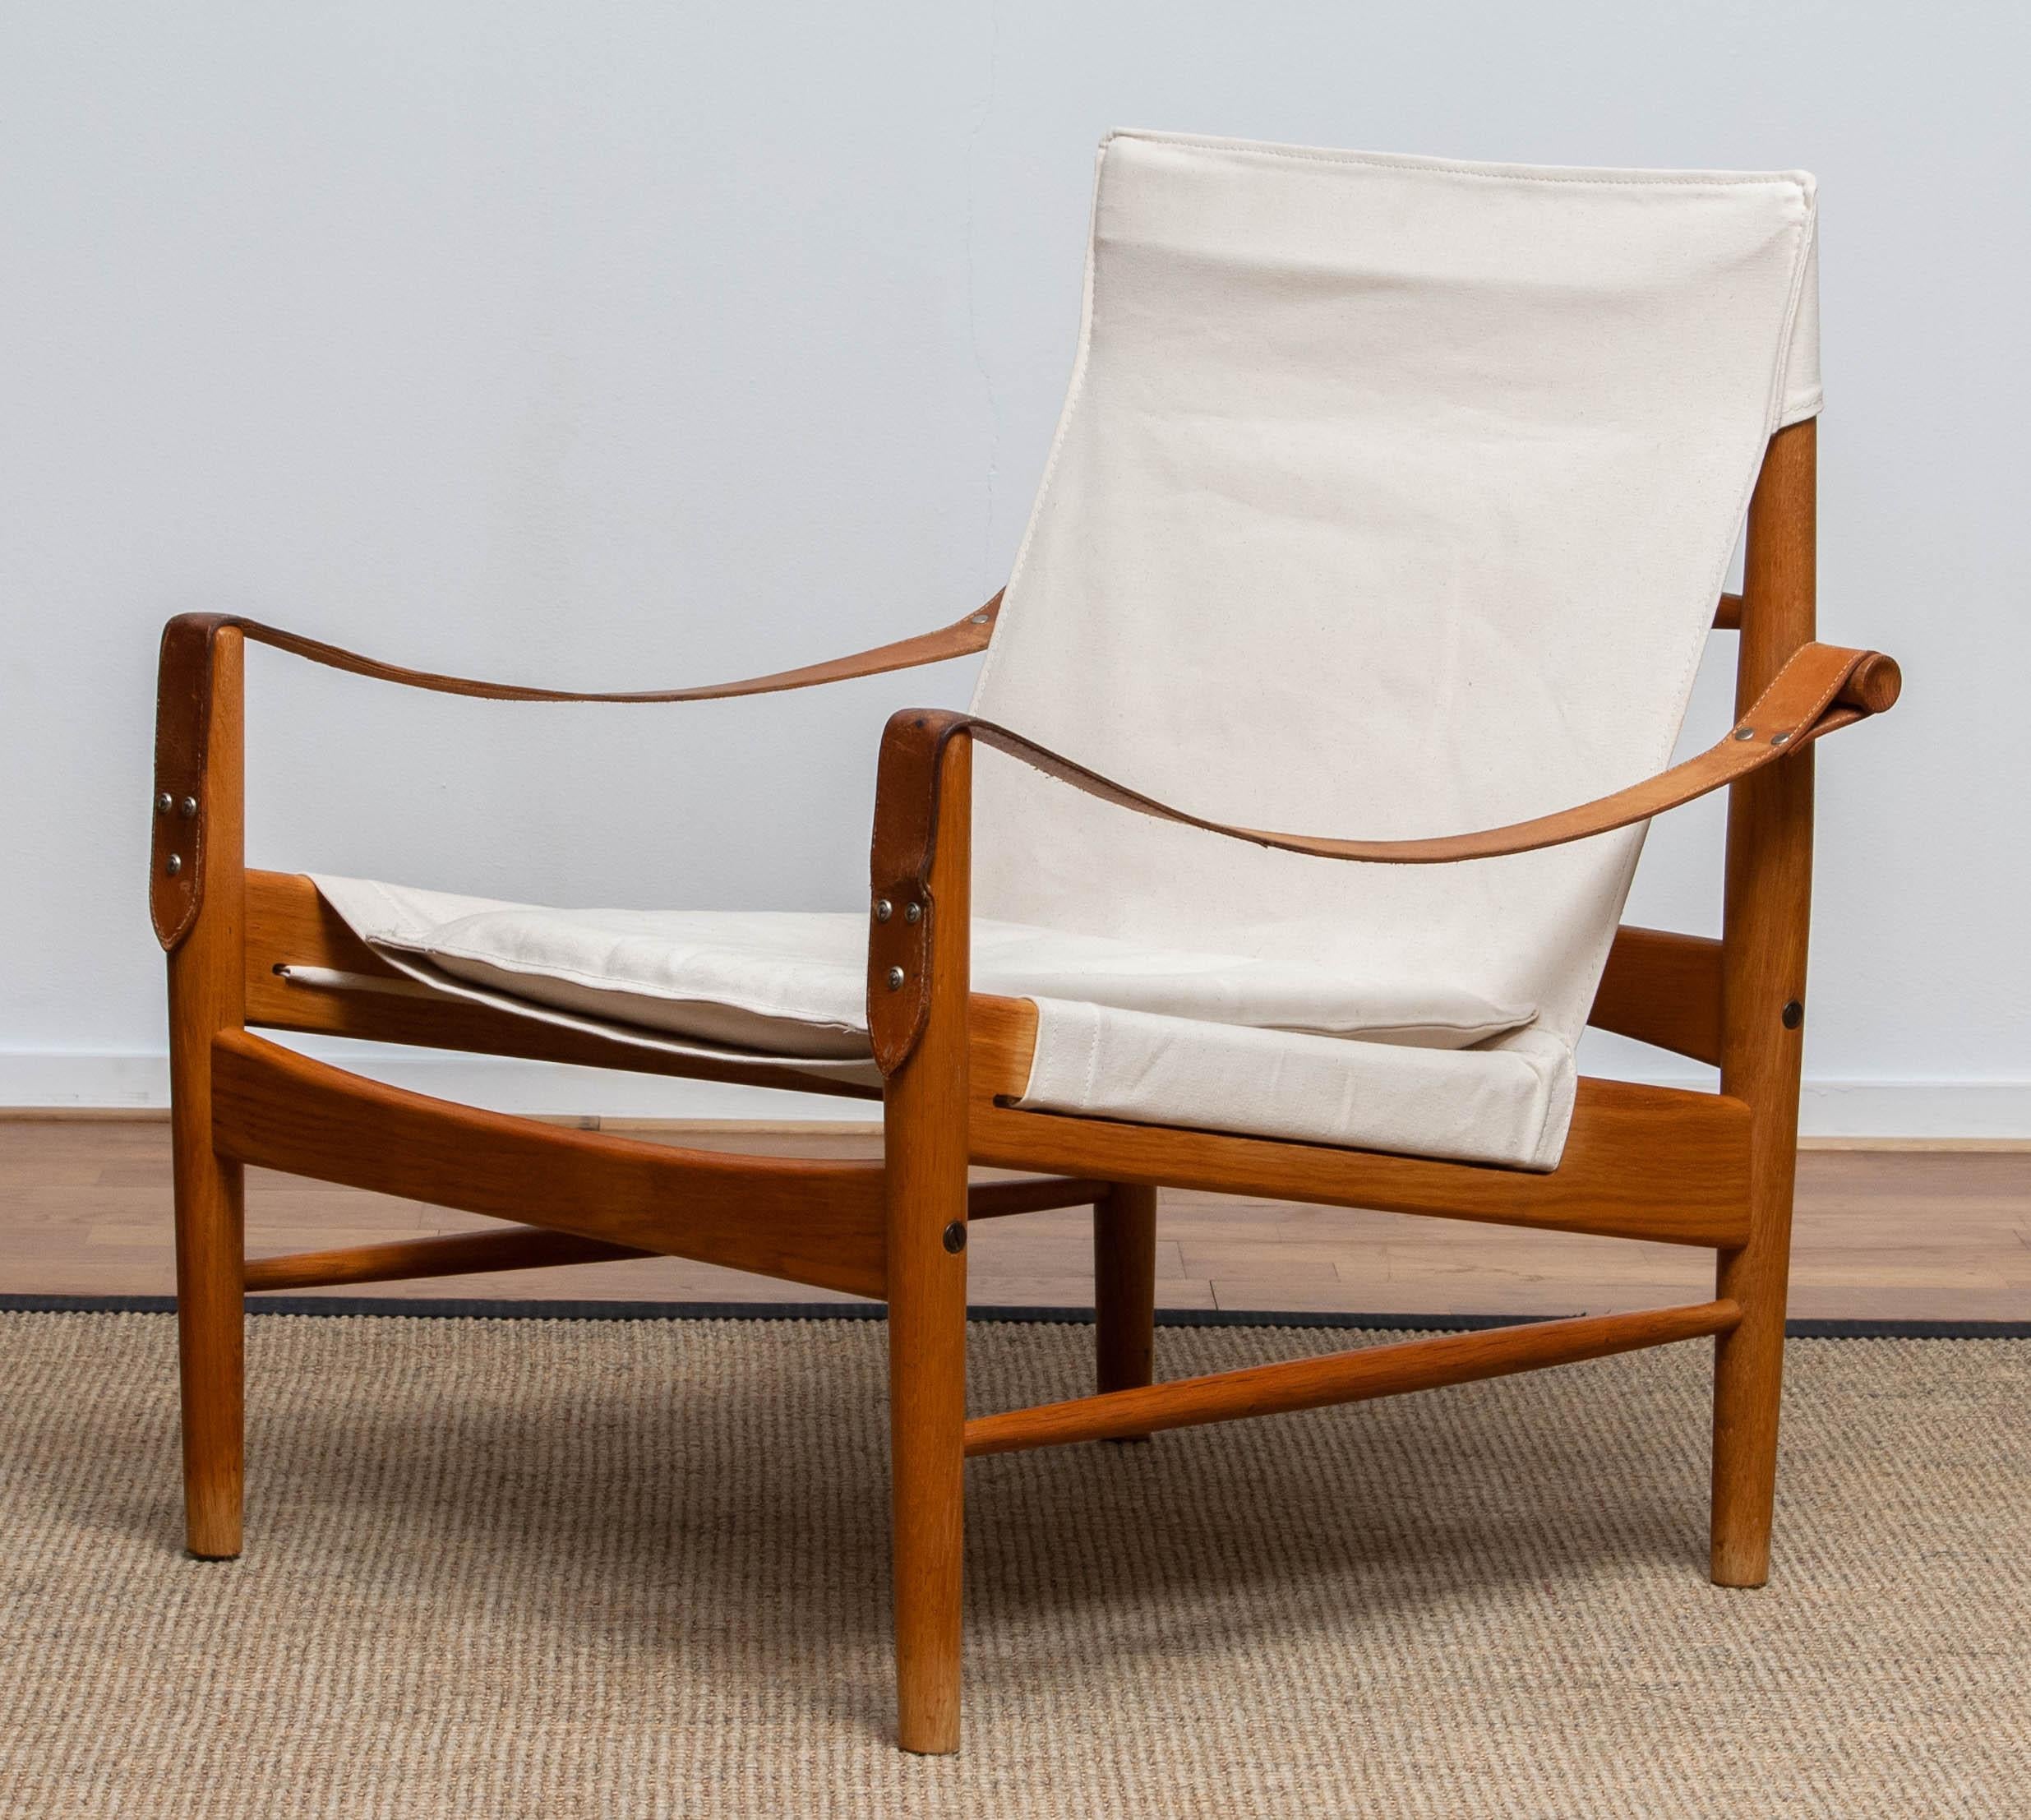 1960s, Safari Lounge Chair by Hans Olsen for Viska Möbler in Kinna, Sweden 1960s 2